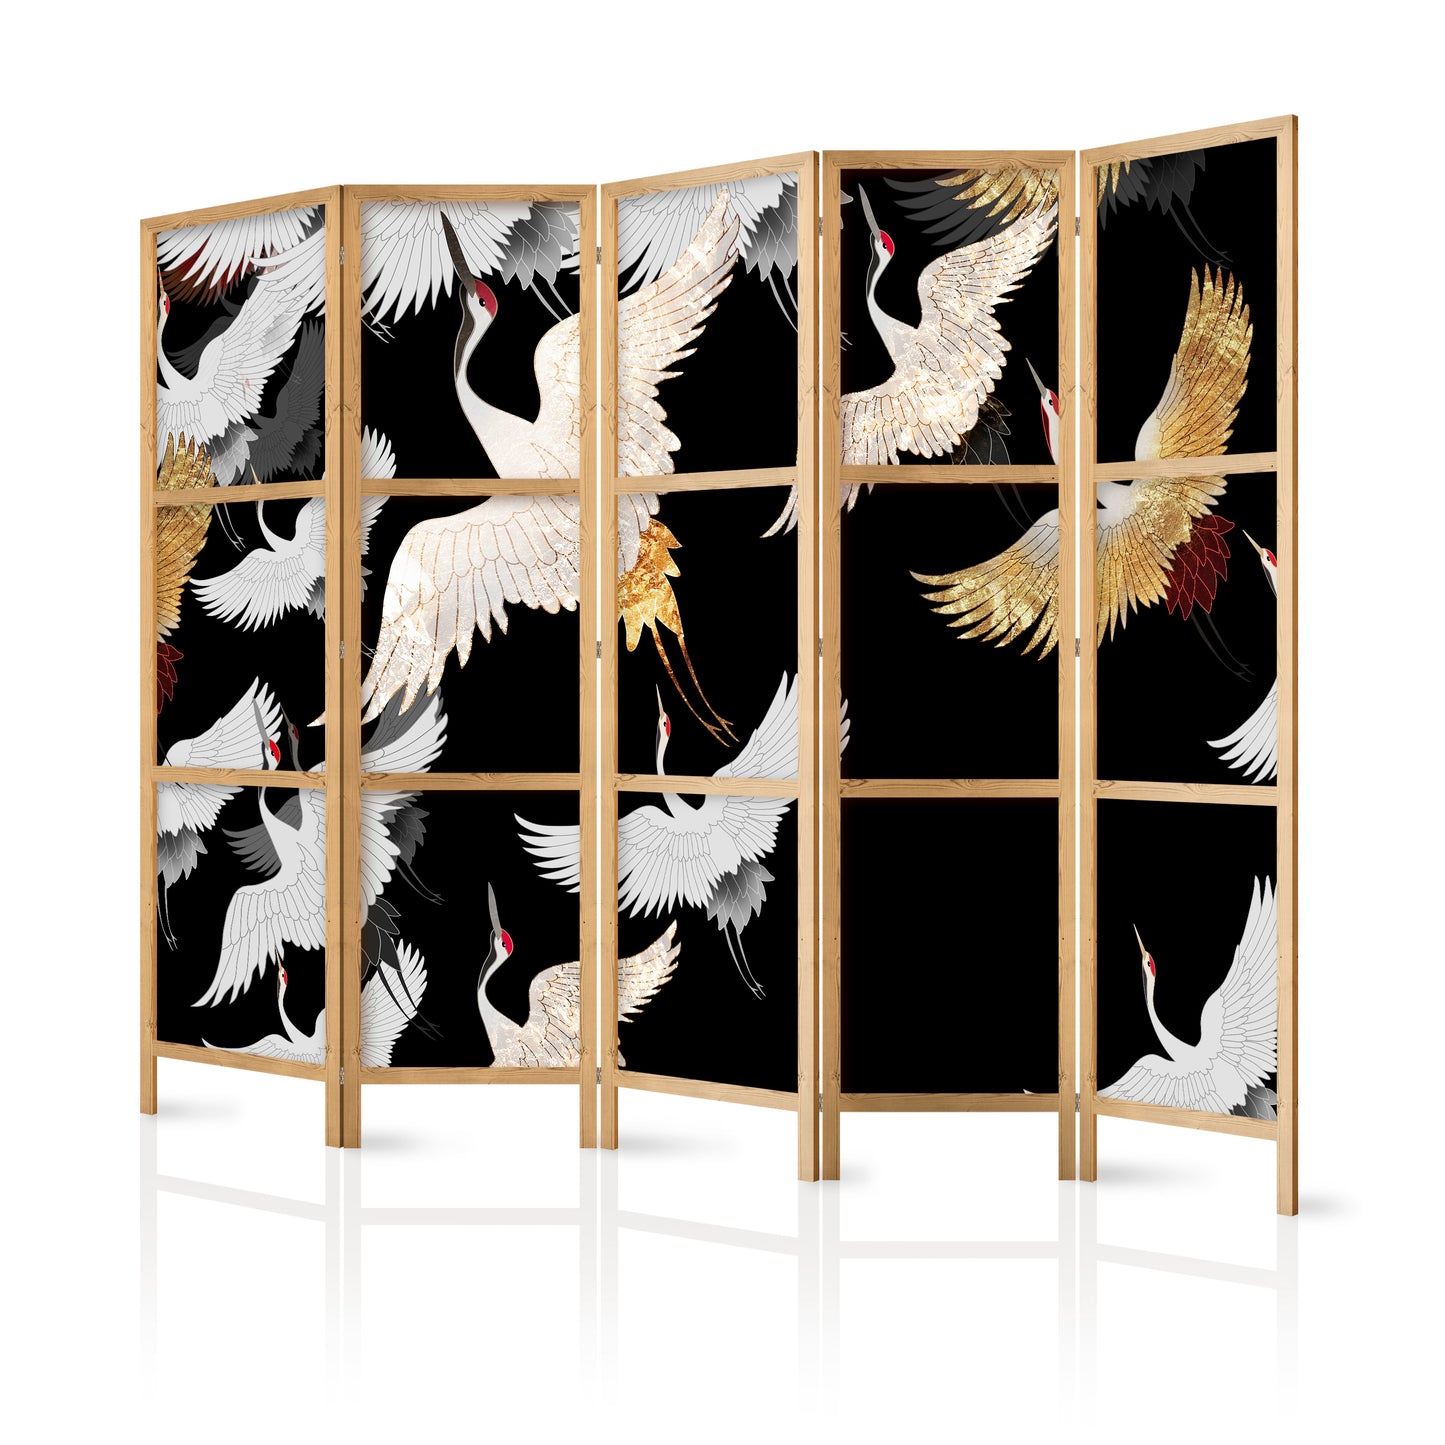 Shoji room Divider - Japanese Room Divider - Cranes at Night - Golden-White Birds Flying Away on a Black Background - ArtfulPrivacy